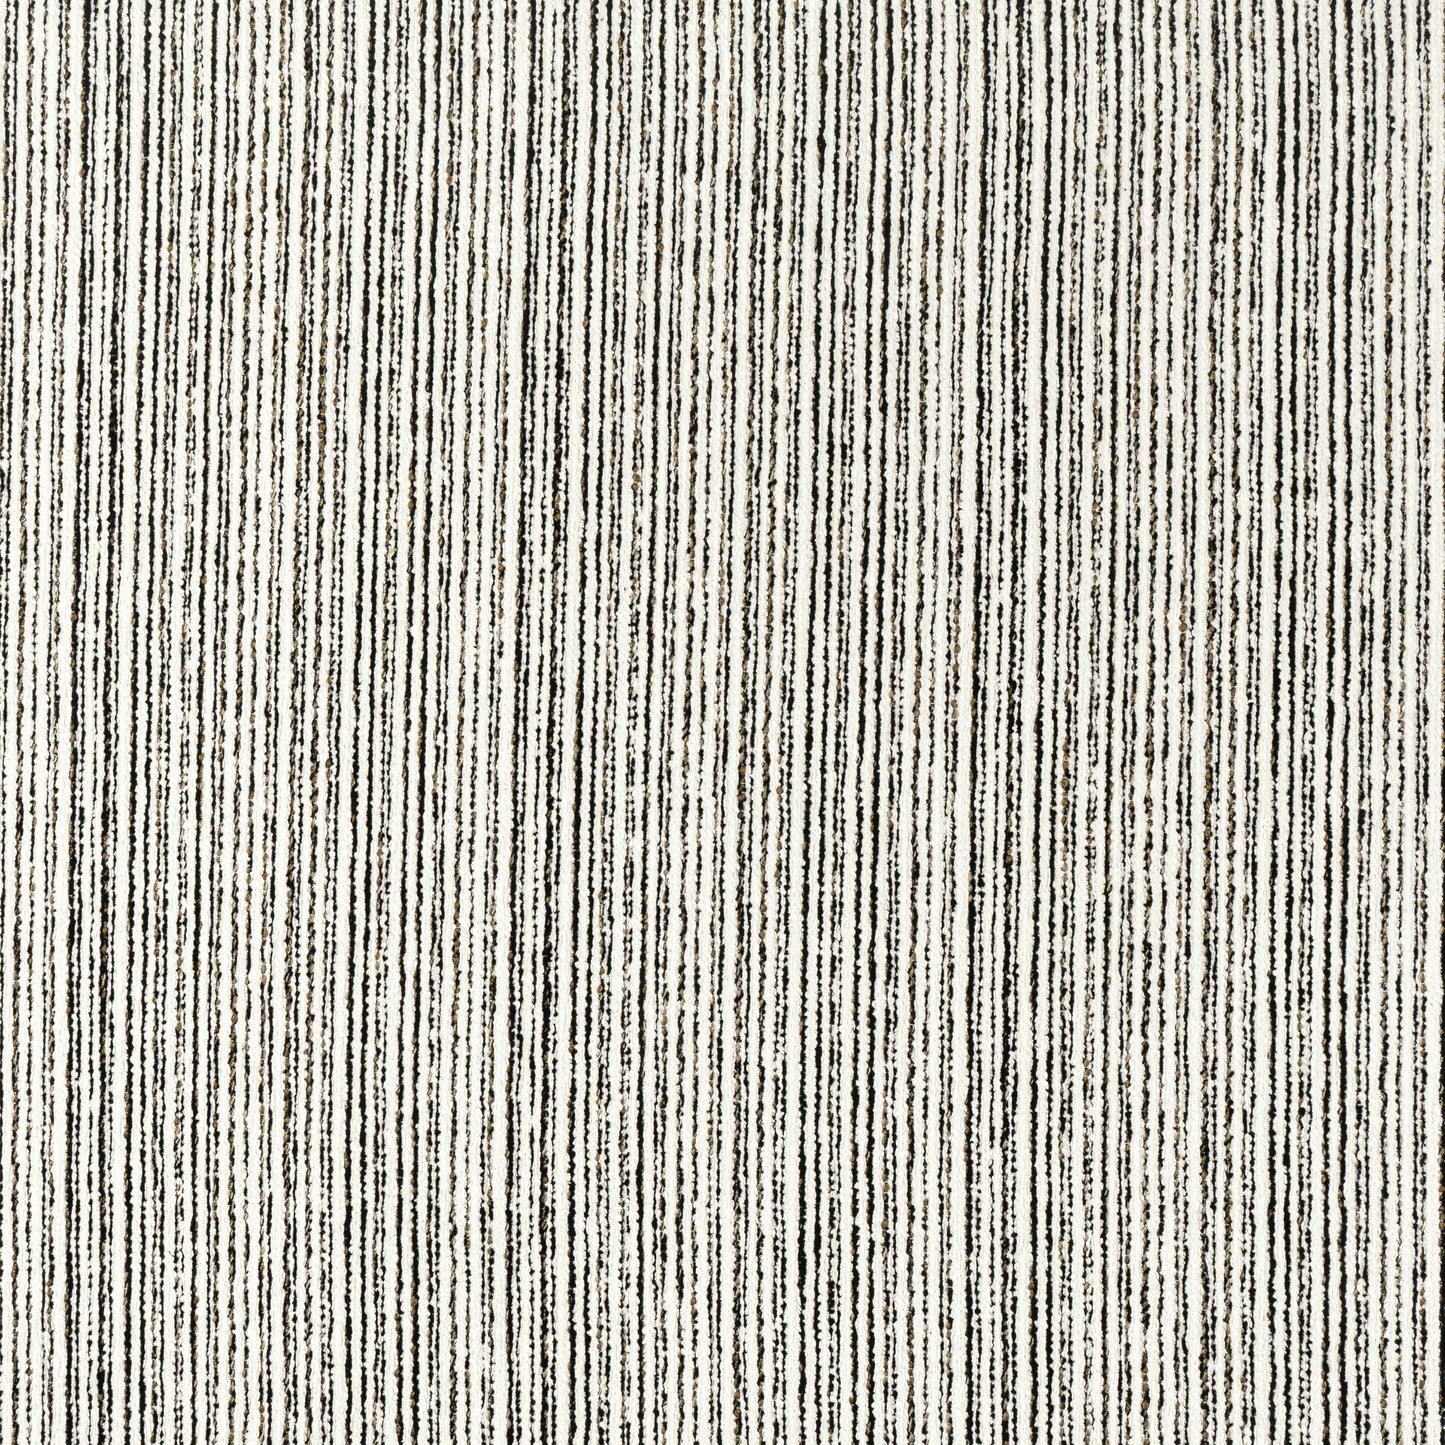 Purchase Thibaut Fabric Item# W8807 pattern name Zia Stripe color Ebony